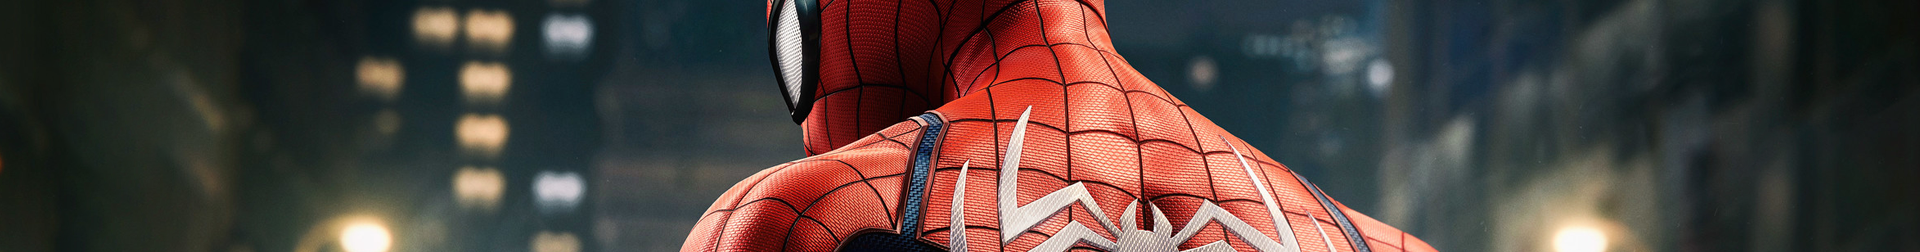 Marvel’s Spider-Man Remastered Banner